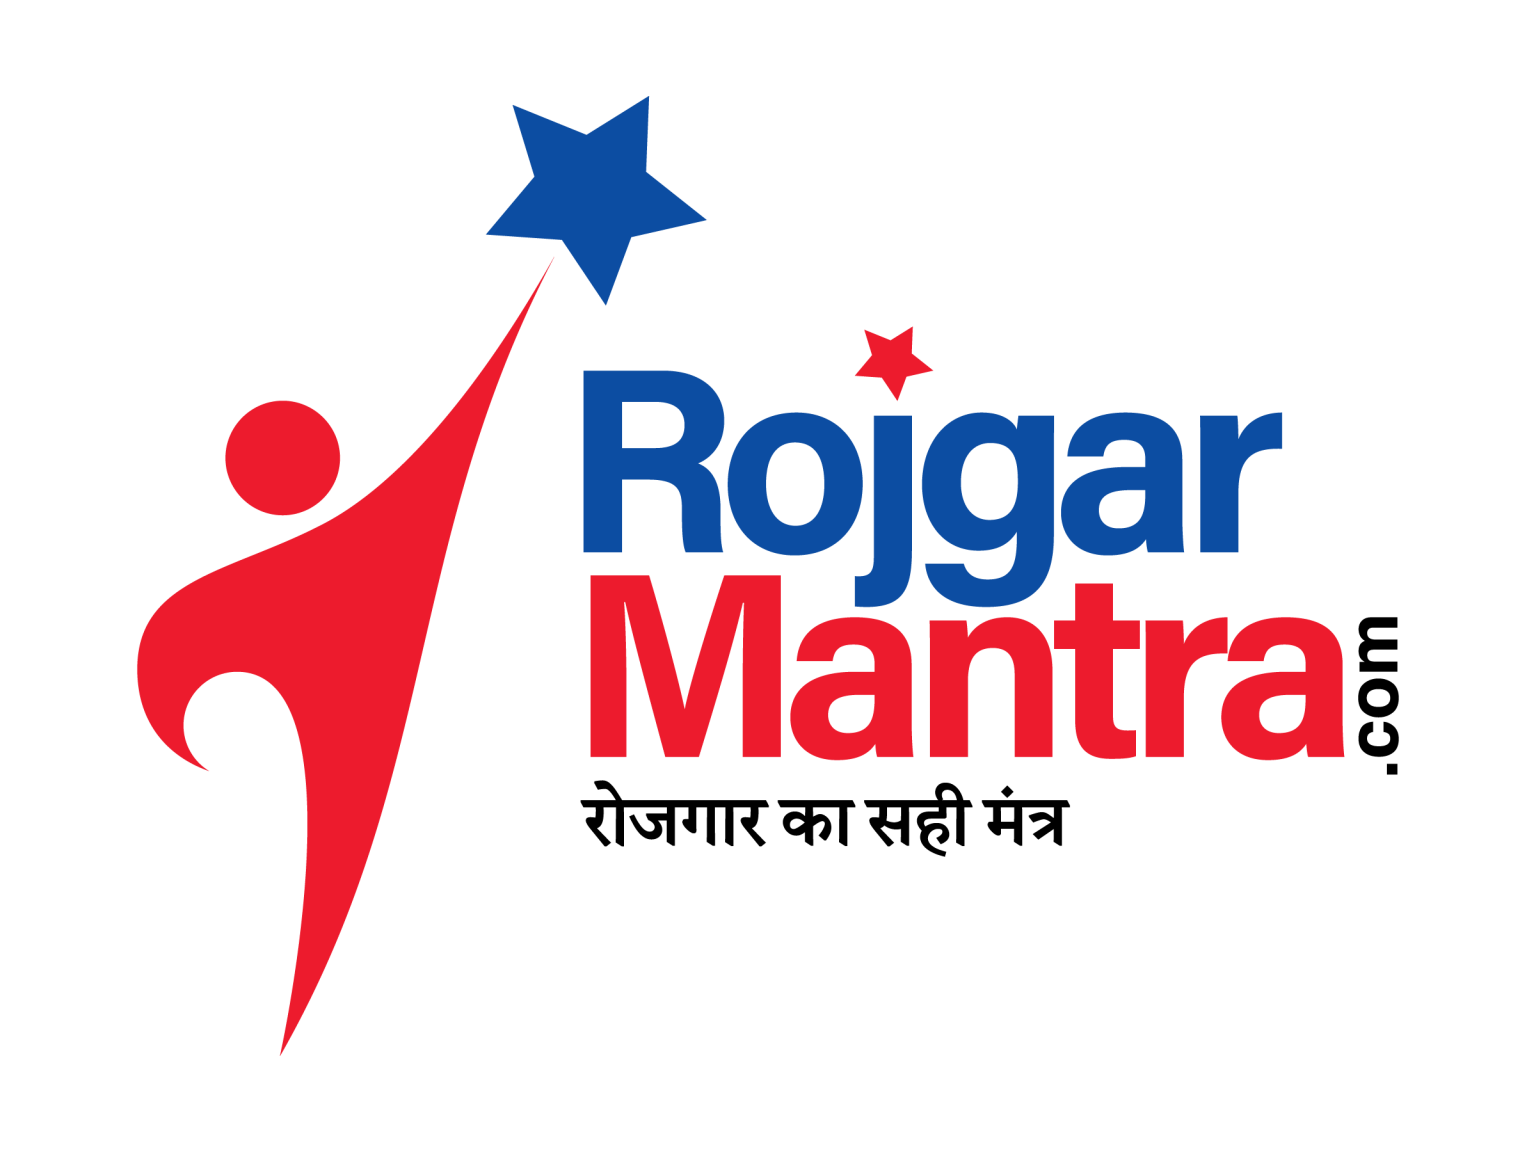 Rojgar Mantra